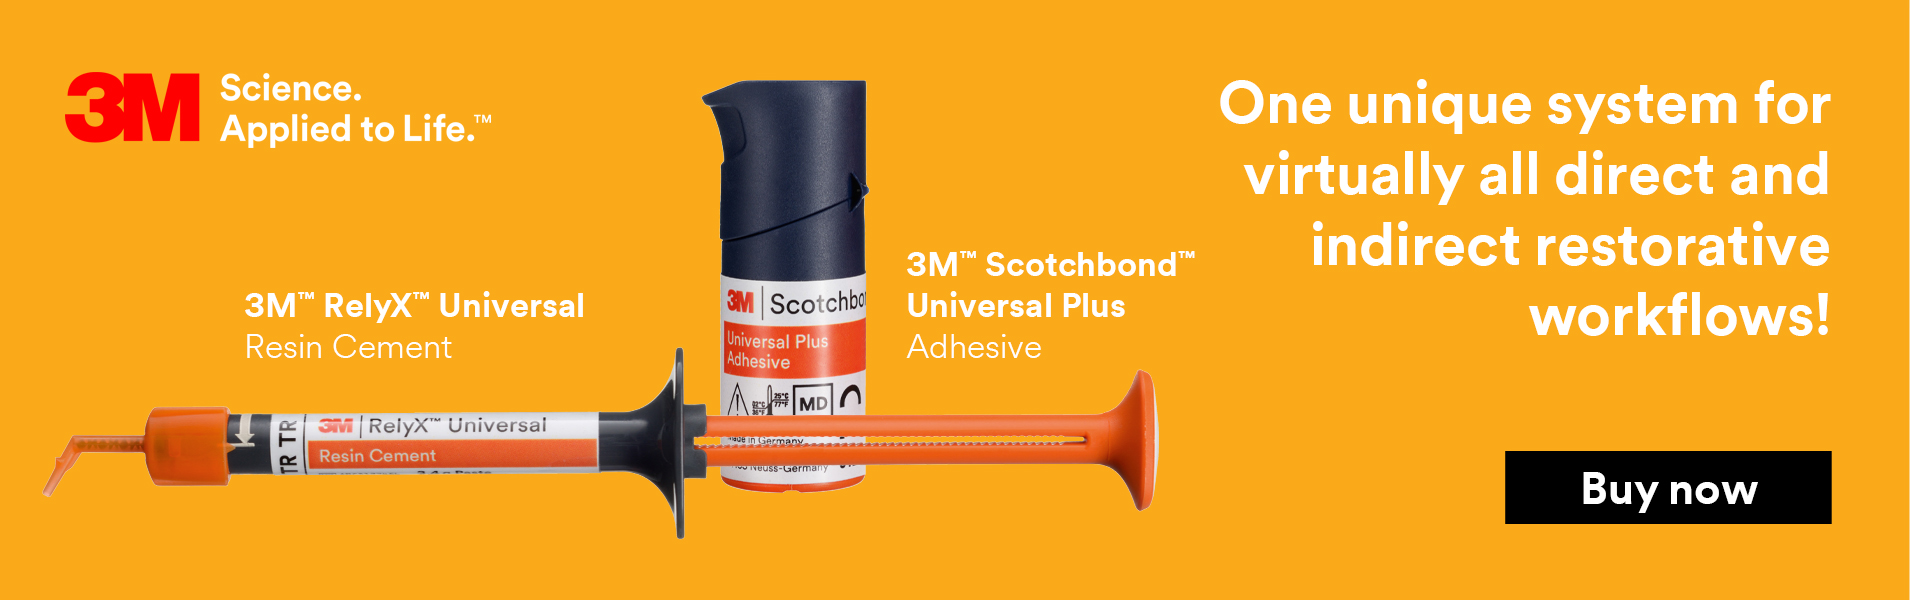 3M Relyx Universal Resin Cement / 3M Scotchbond Universal Plus Adhesive